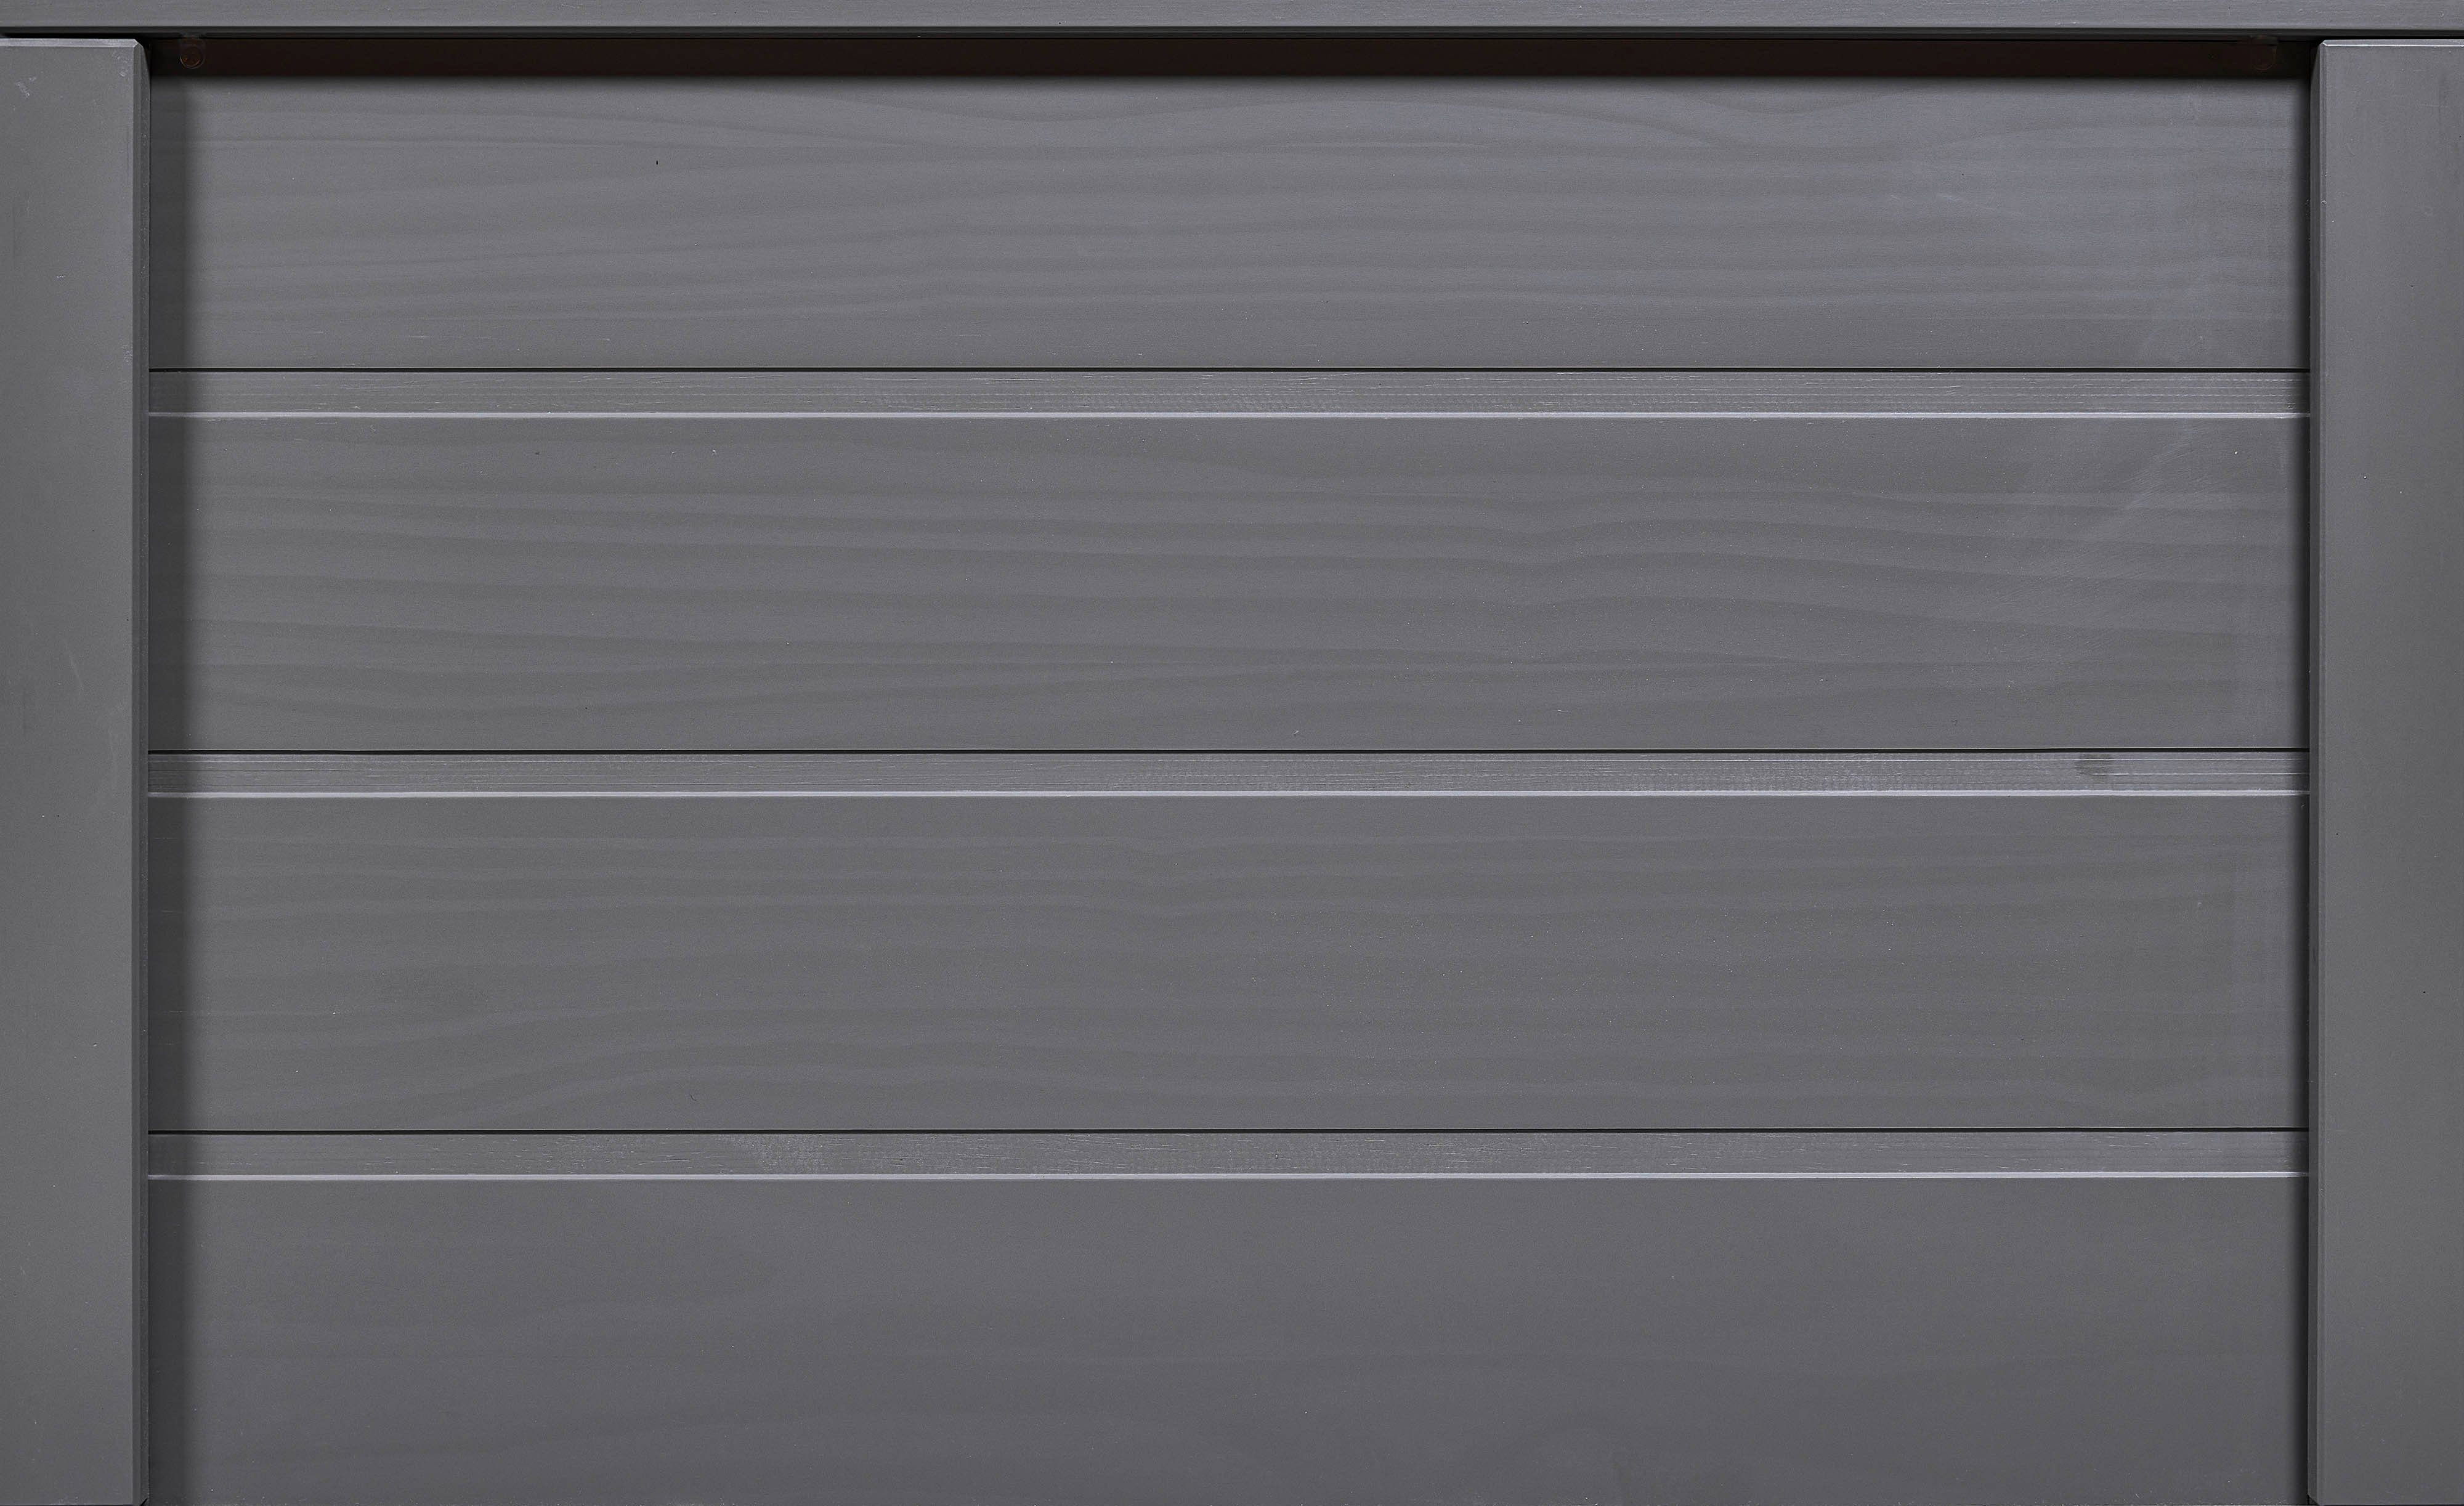 Grau in 90x200, the Dream Future, aus Lattenrost, mit 2 2 Link Inter Farben Funktionsbett Liegeflächen Massivholz,